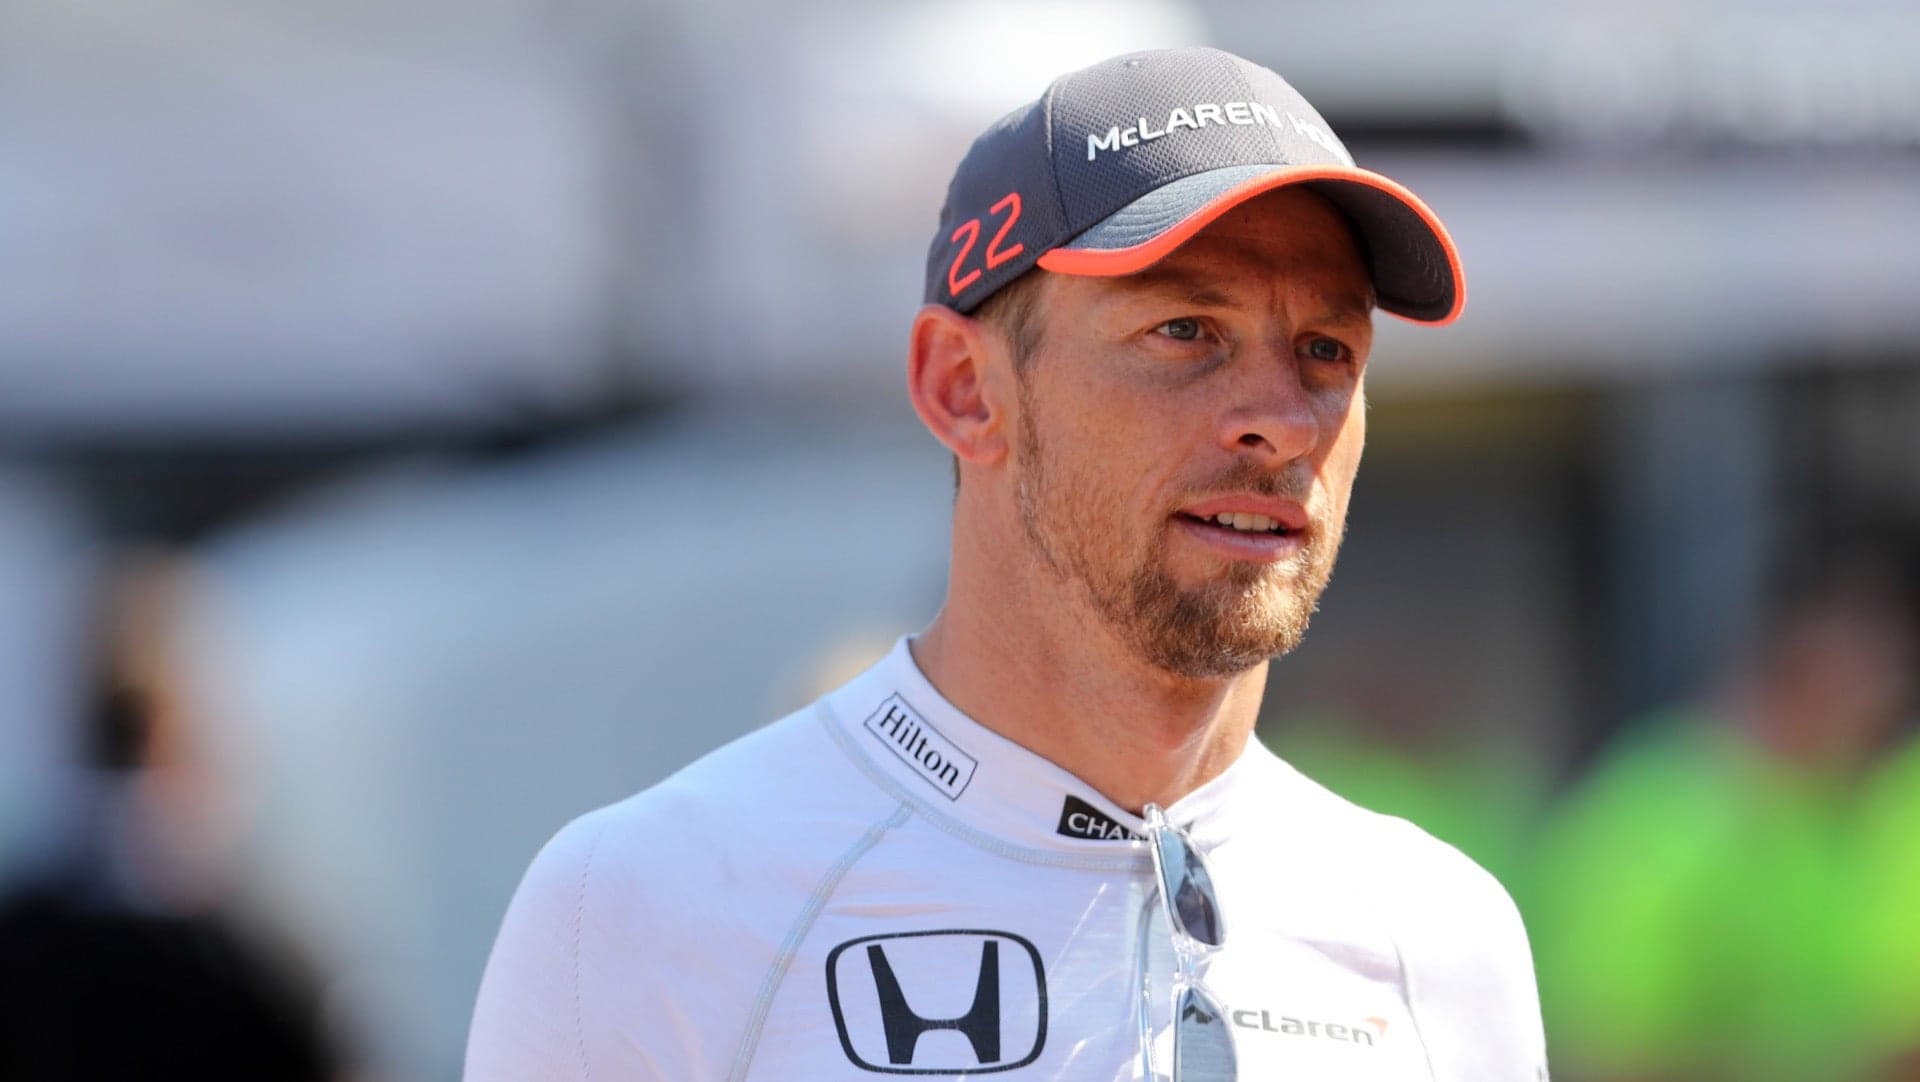 Jenson Button Was Almost Chosen to Drive for Penske-Acura in 2018